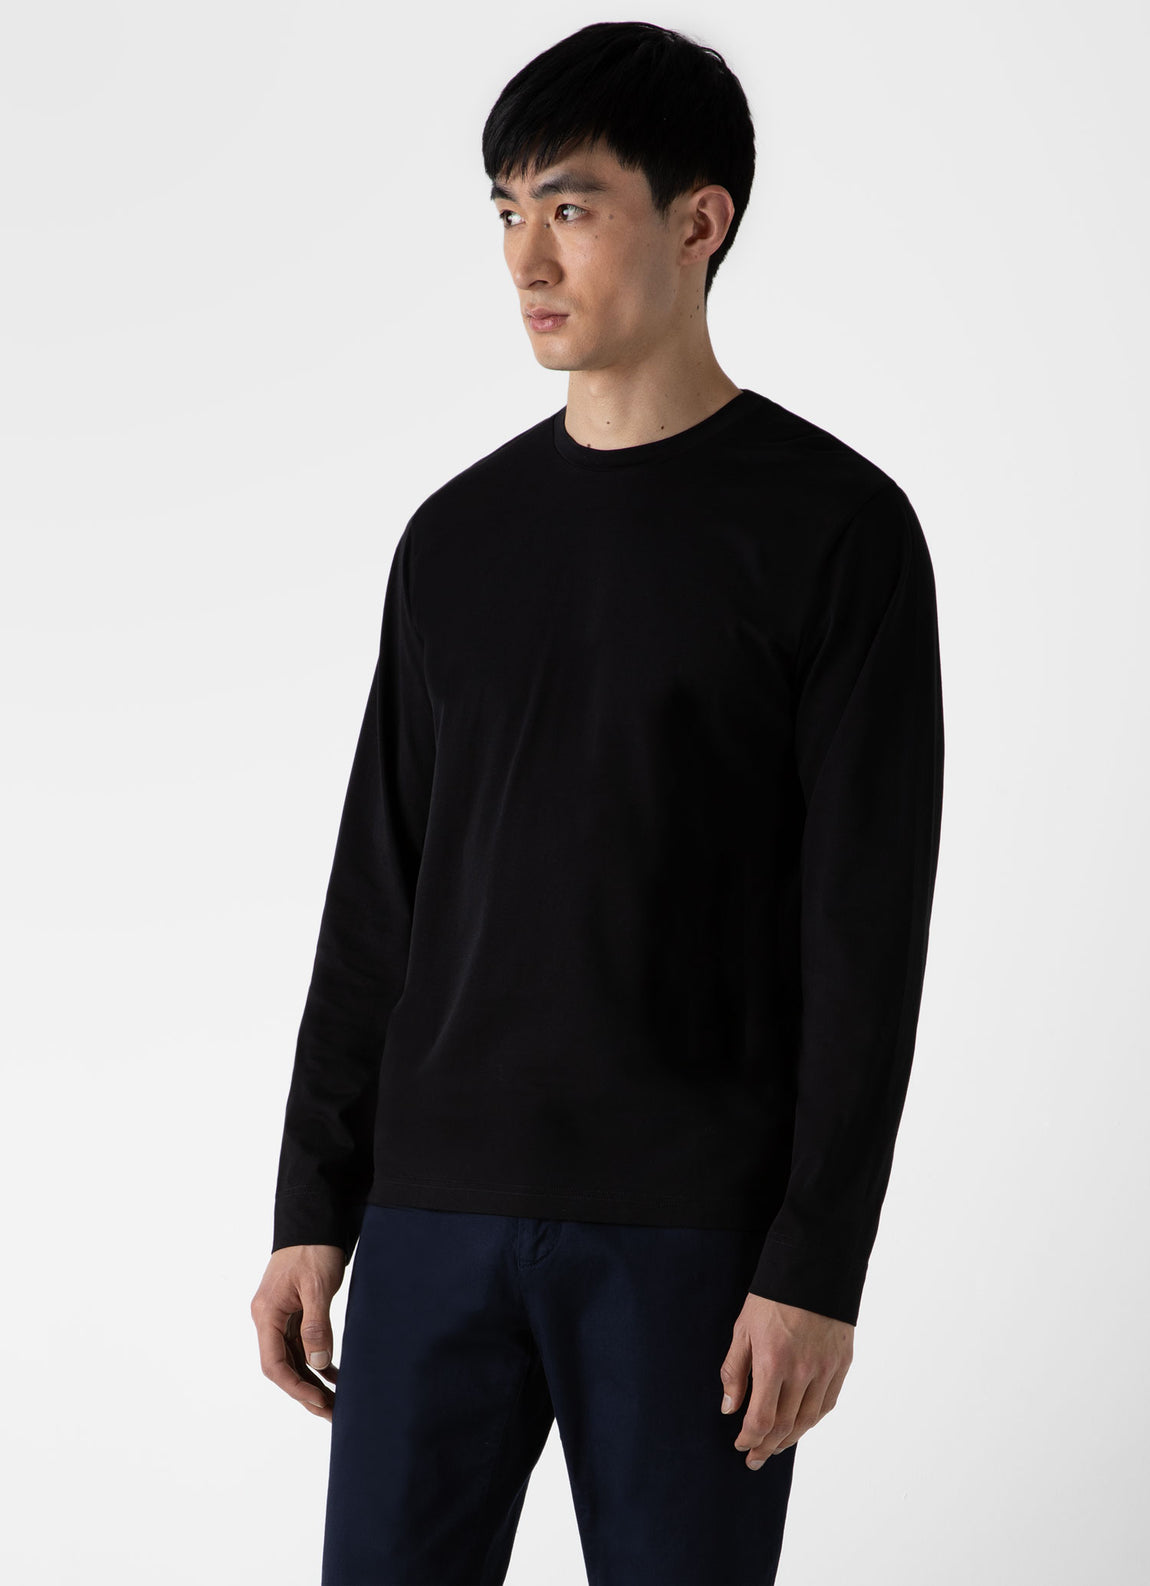 Men's Long Sleeve Riviera Midweight T-shirt in Black | Sunspel